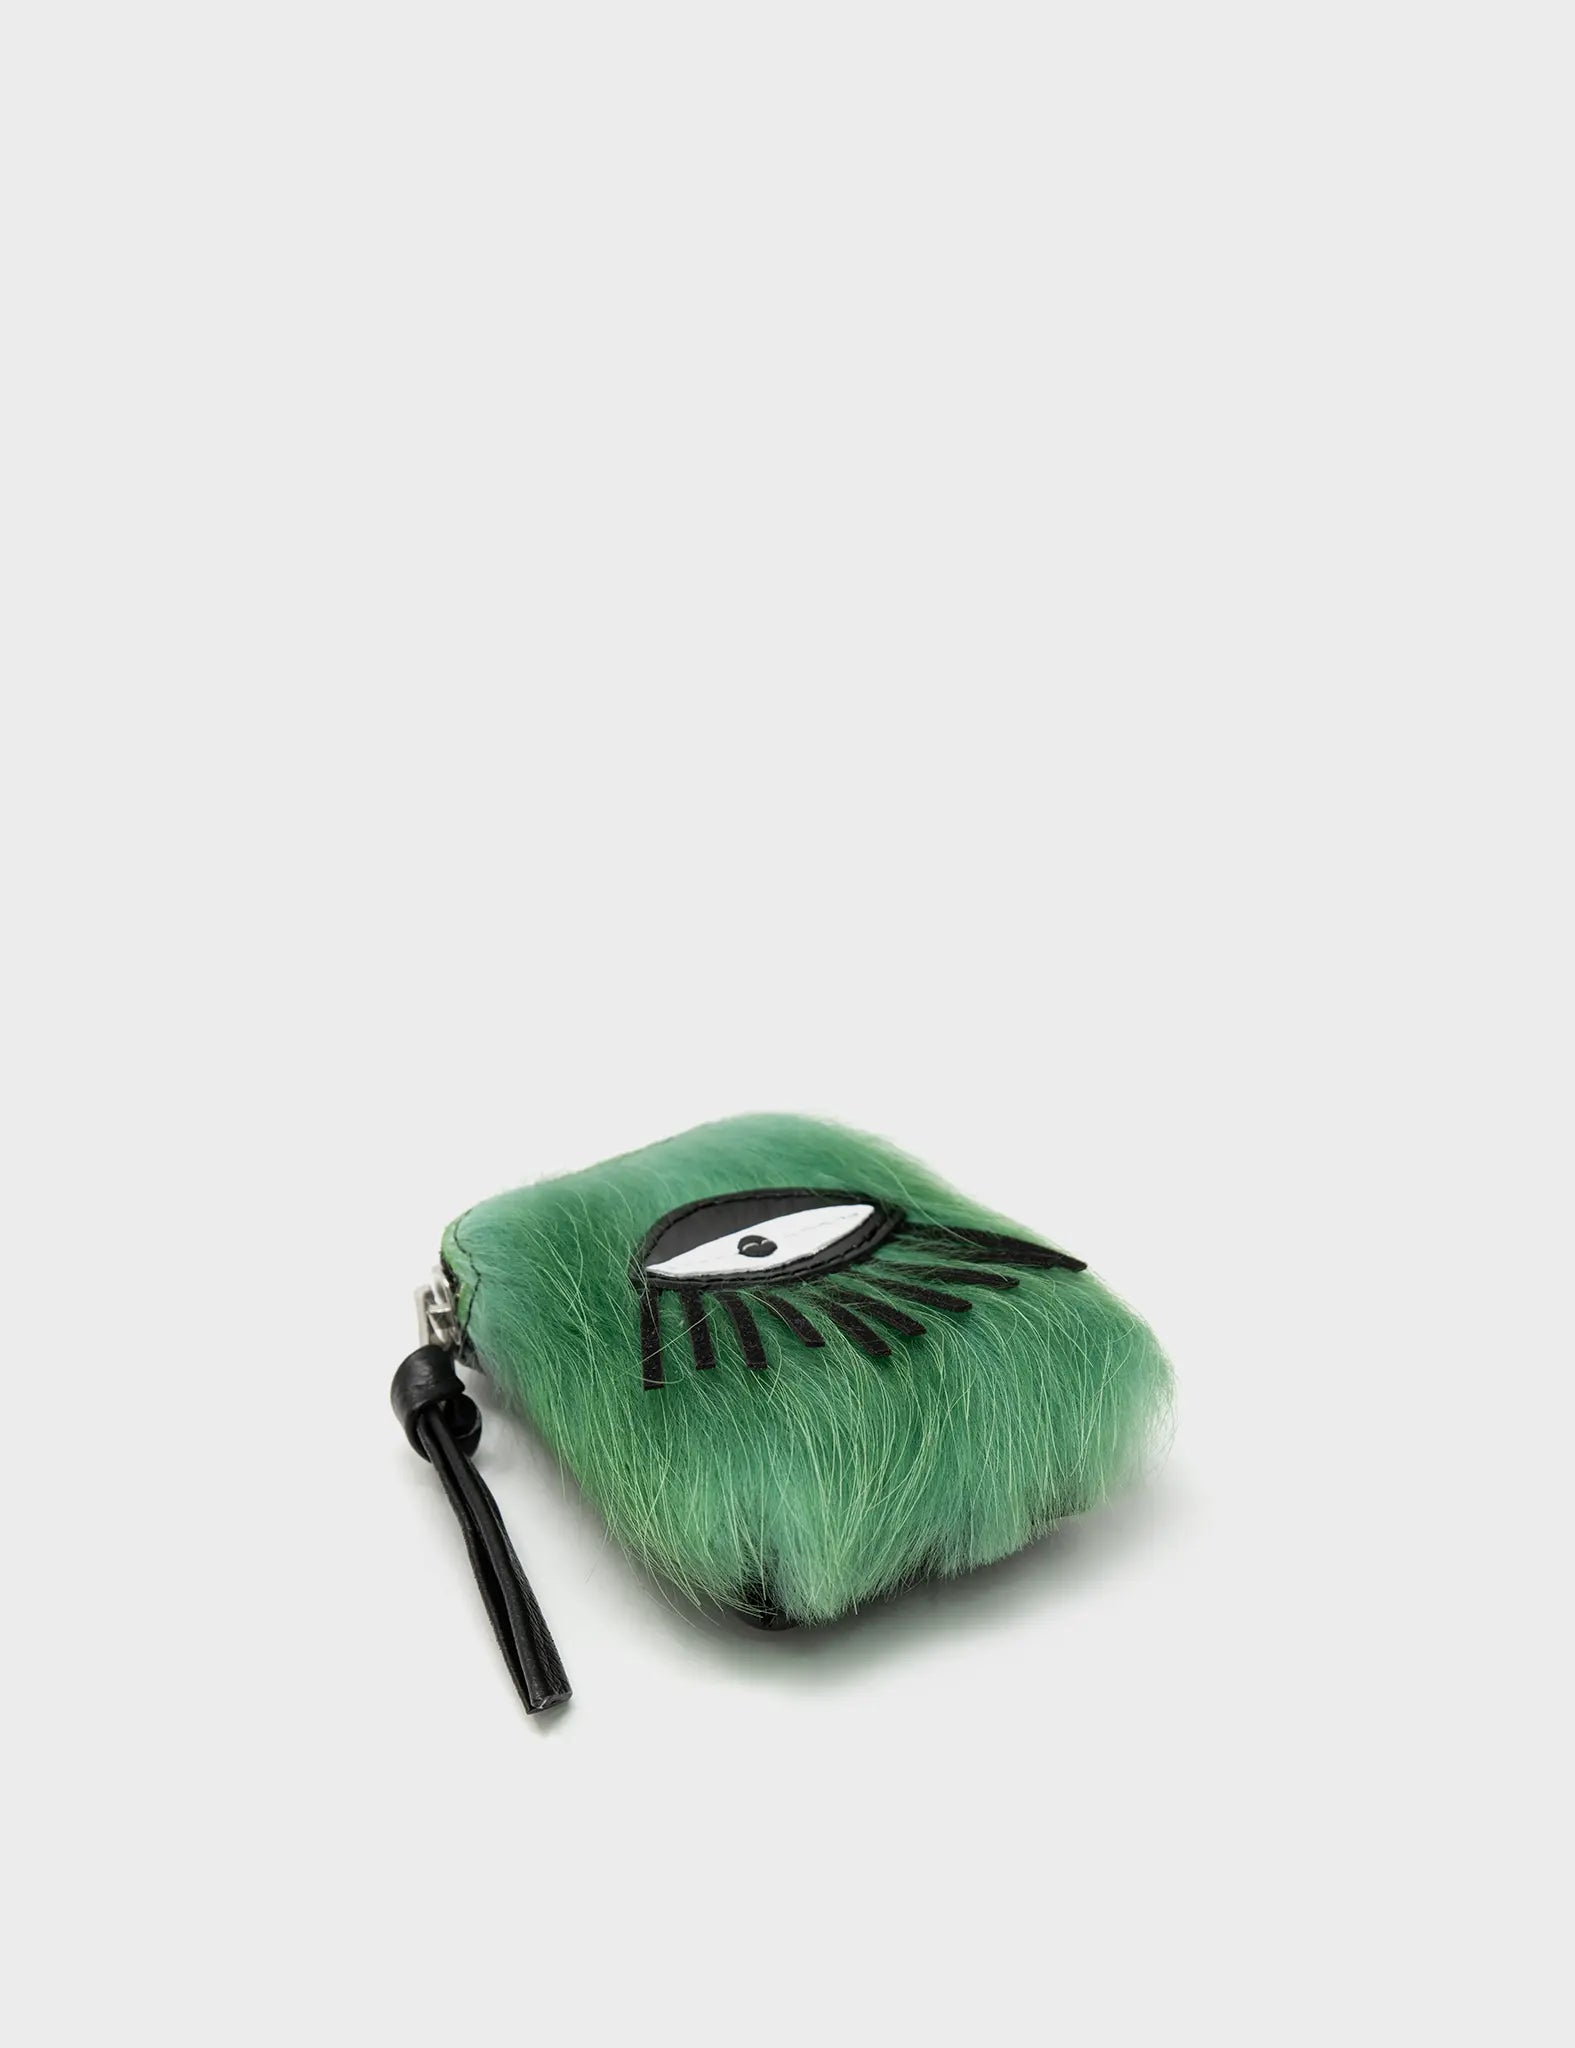 CLAUDIA ROLDANI ITALIAN DESIGN Green Fur Bovine LEATHER SHOULDER BAG Purse  | eBay